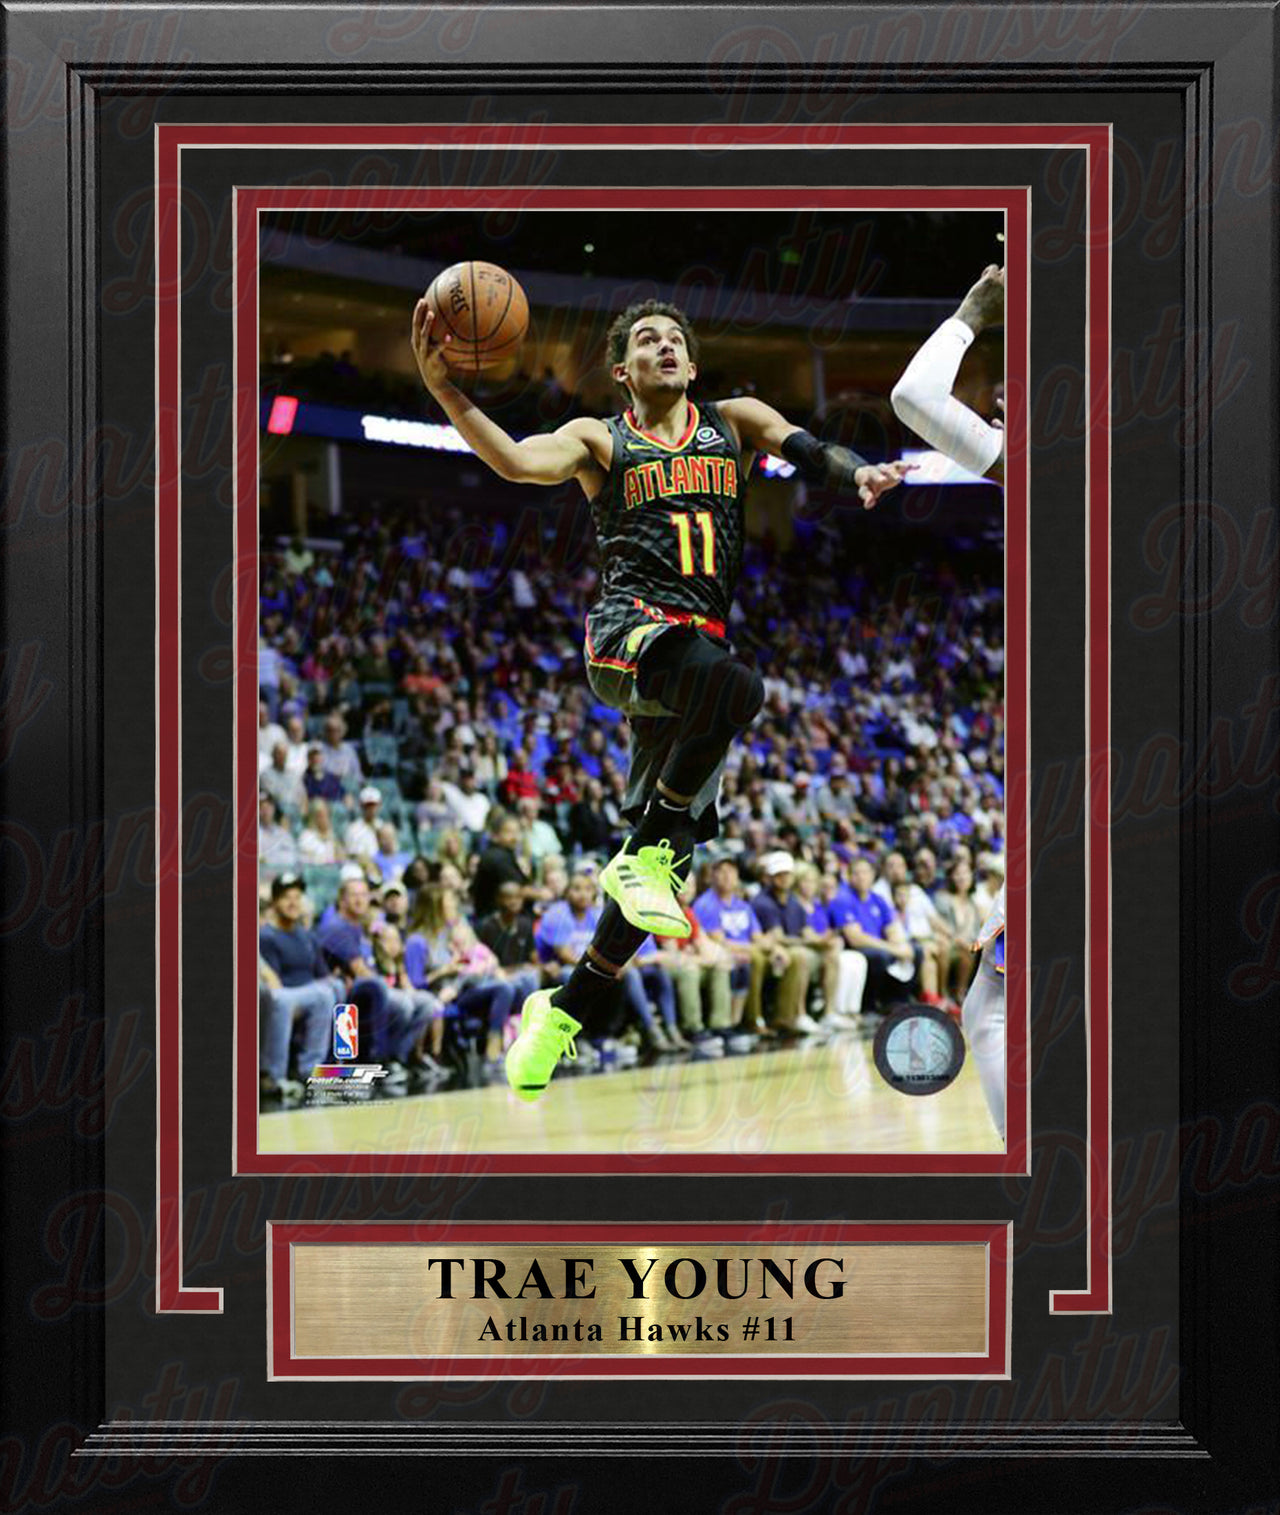 Trae Young Atlanta Hawks NBA Basketball 8" x 10" Framed and Matted Photo - Dynasty Sports & Framing 